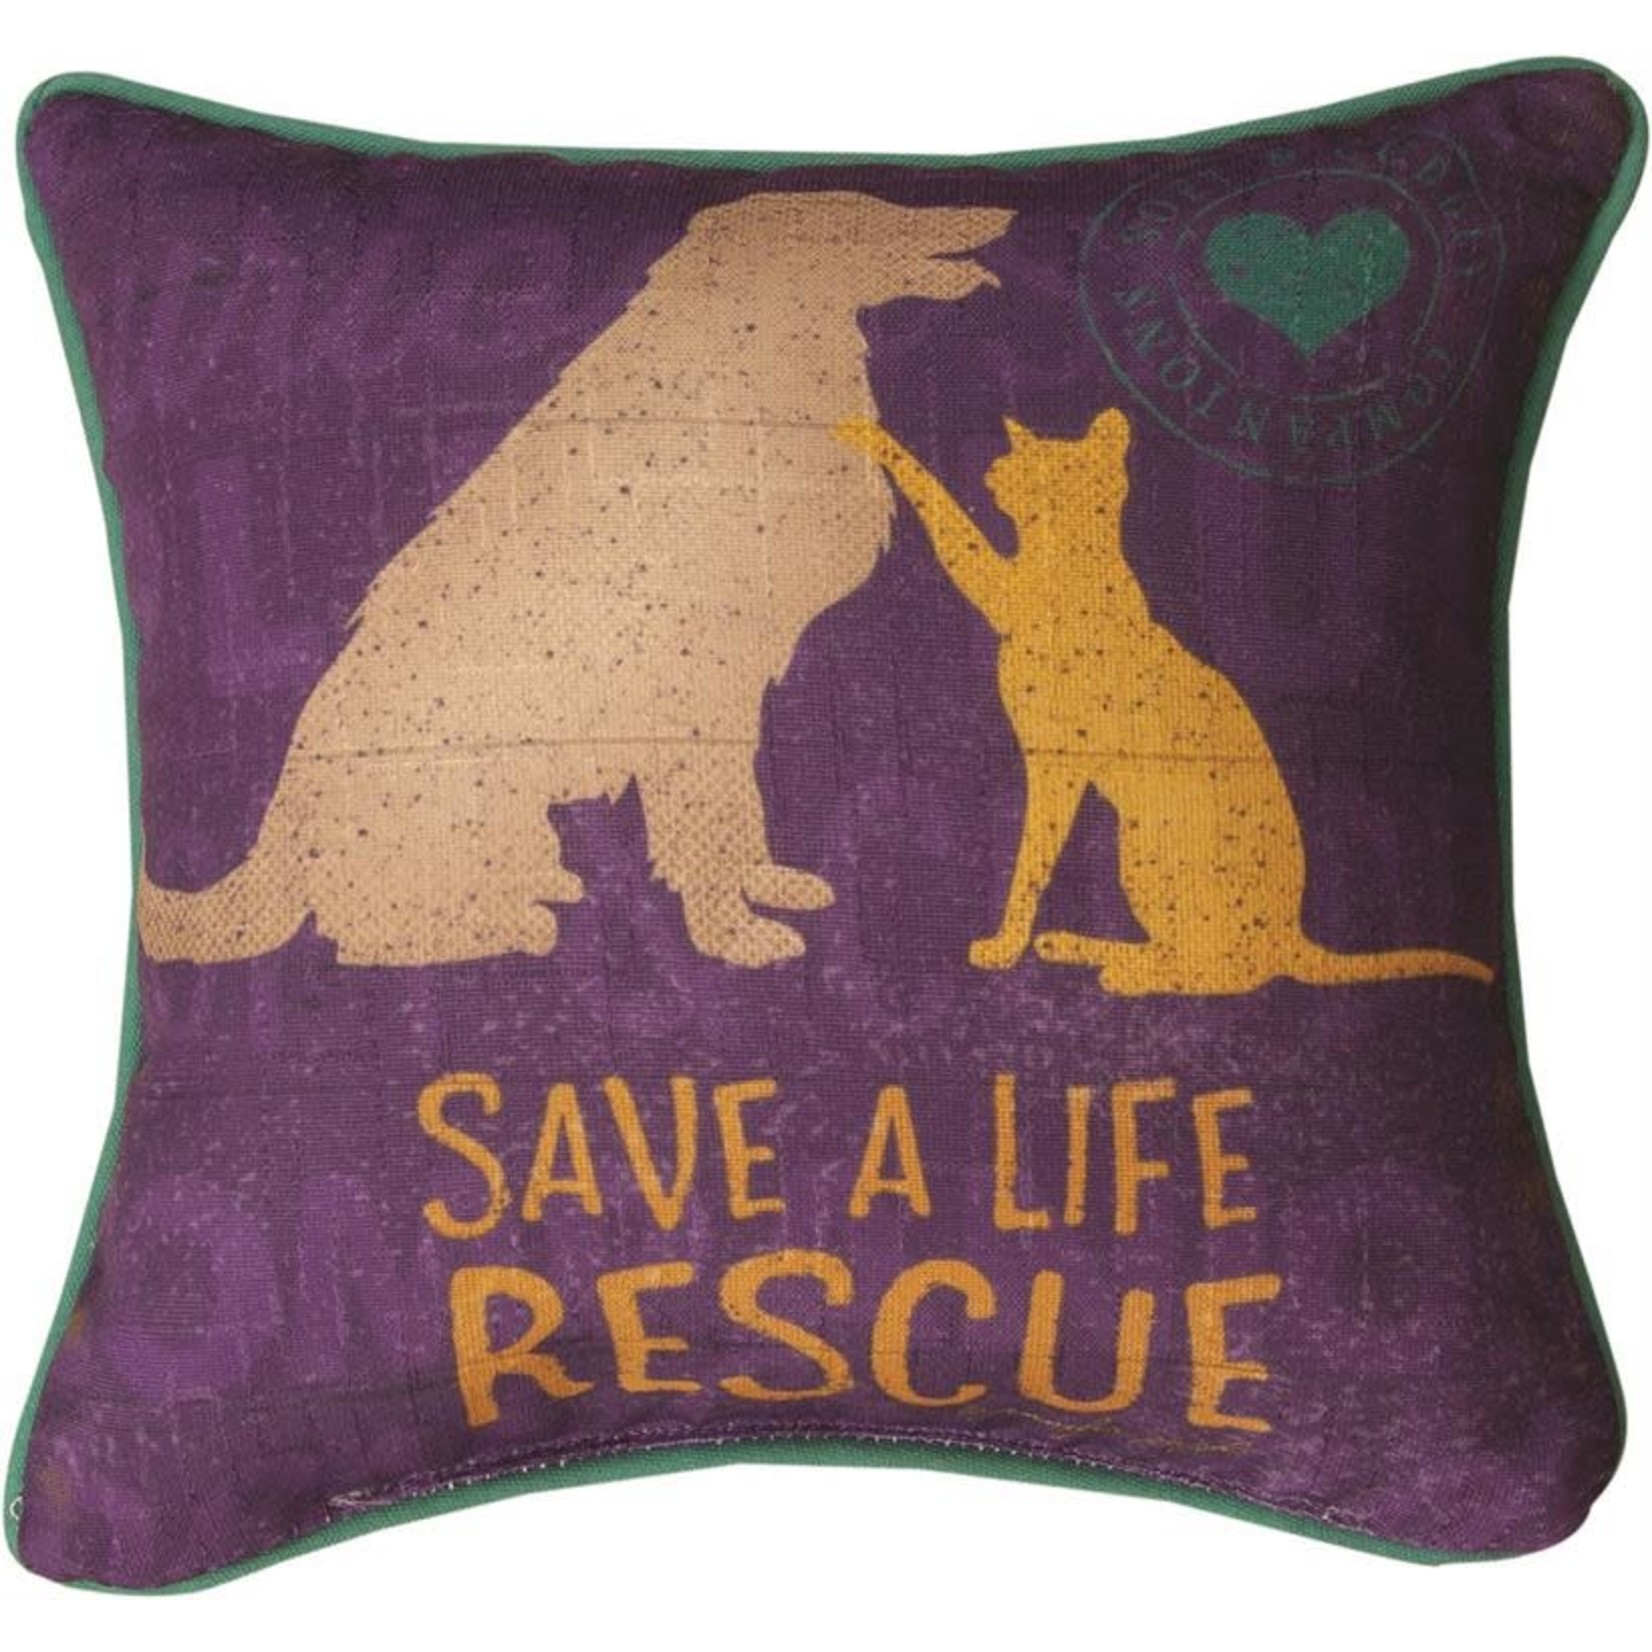 "RESCUE, SAVE A LIFE" PET PILLOW